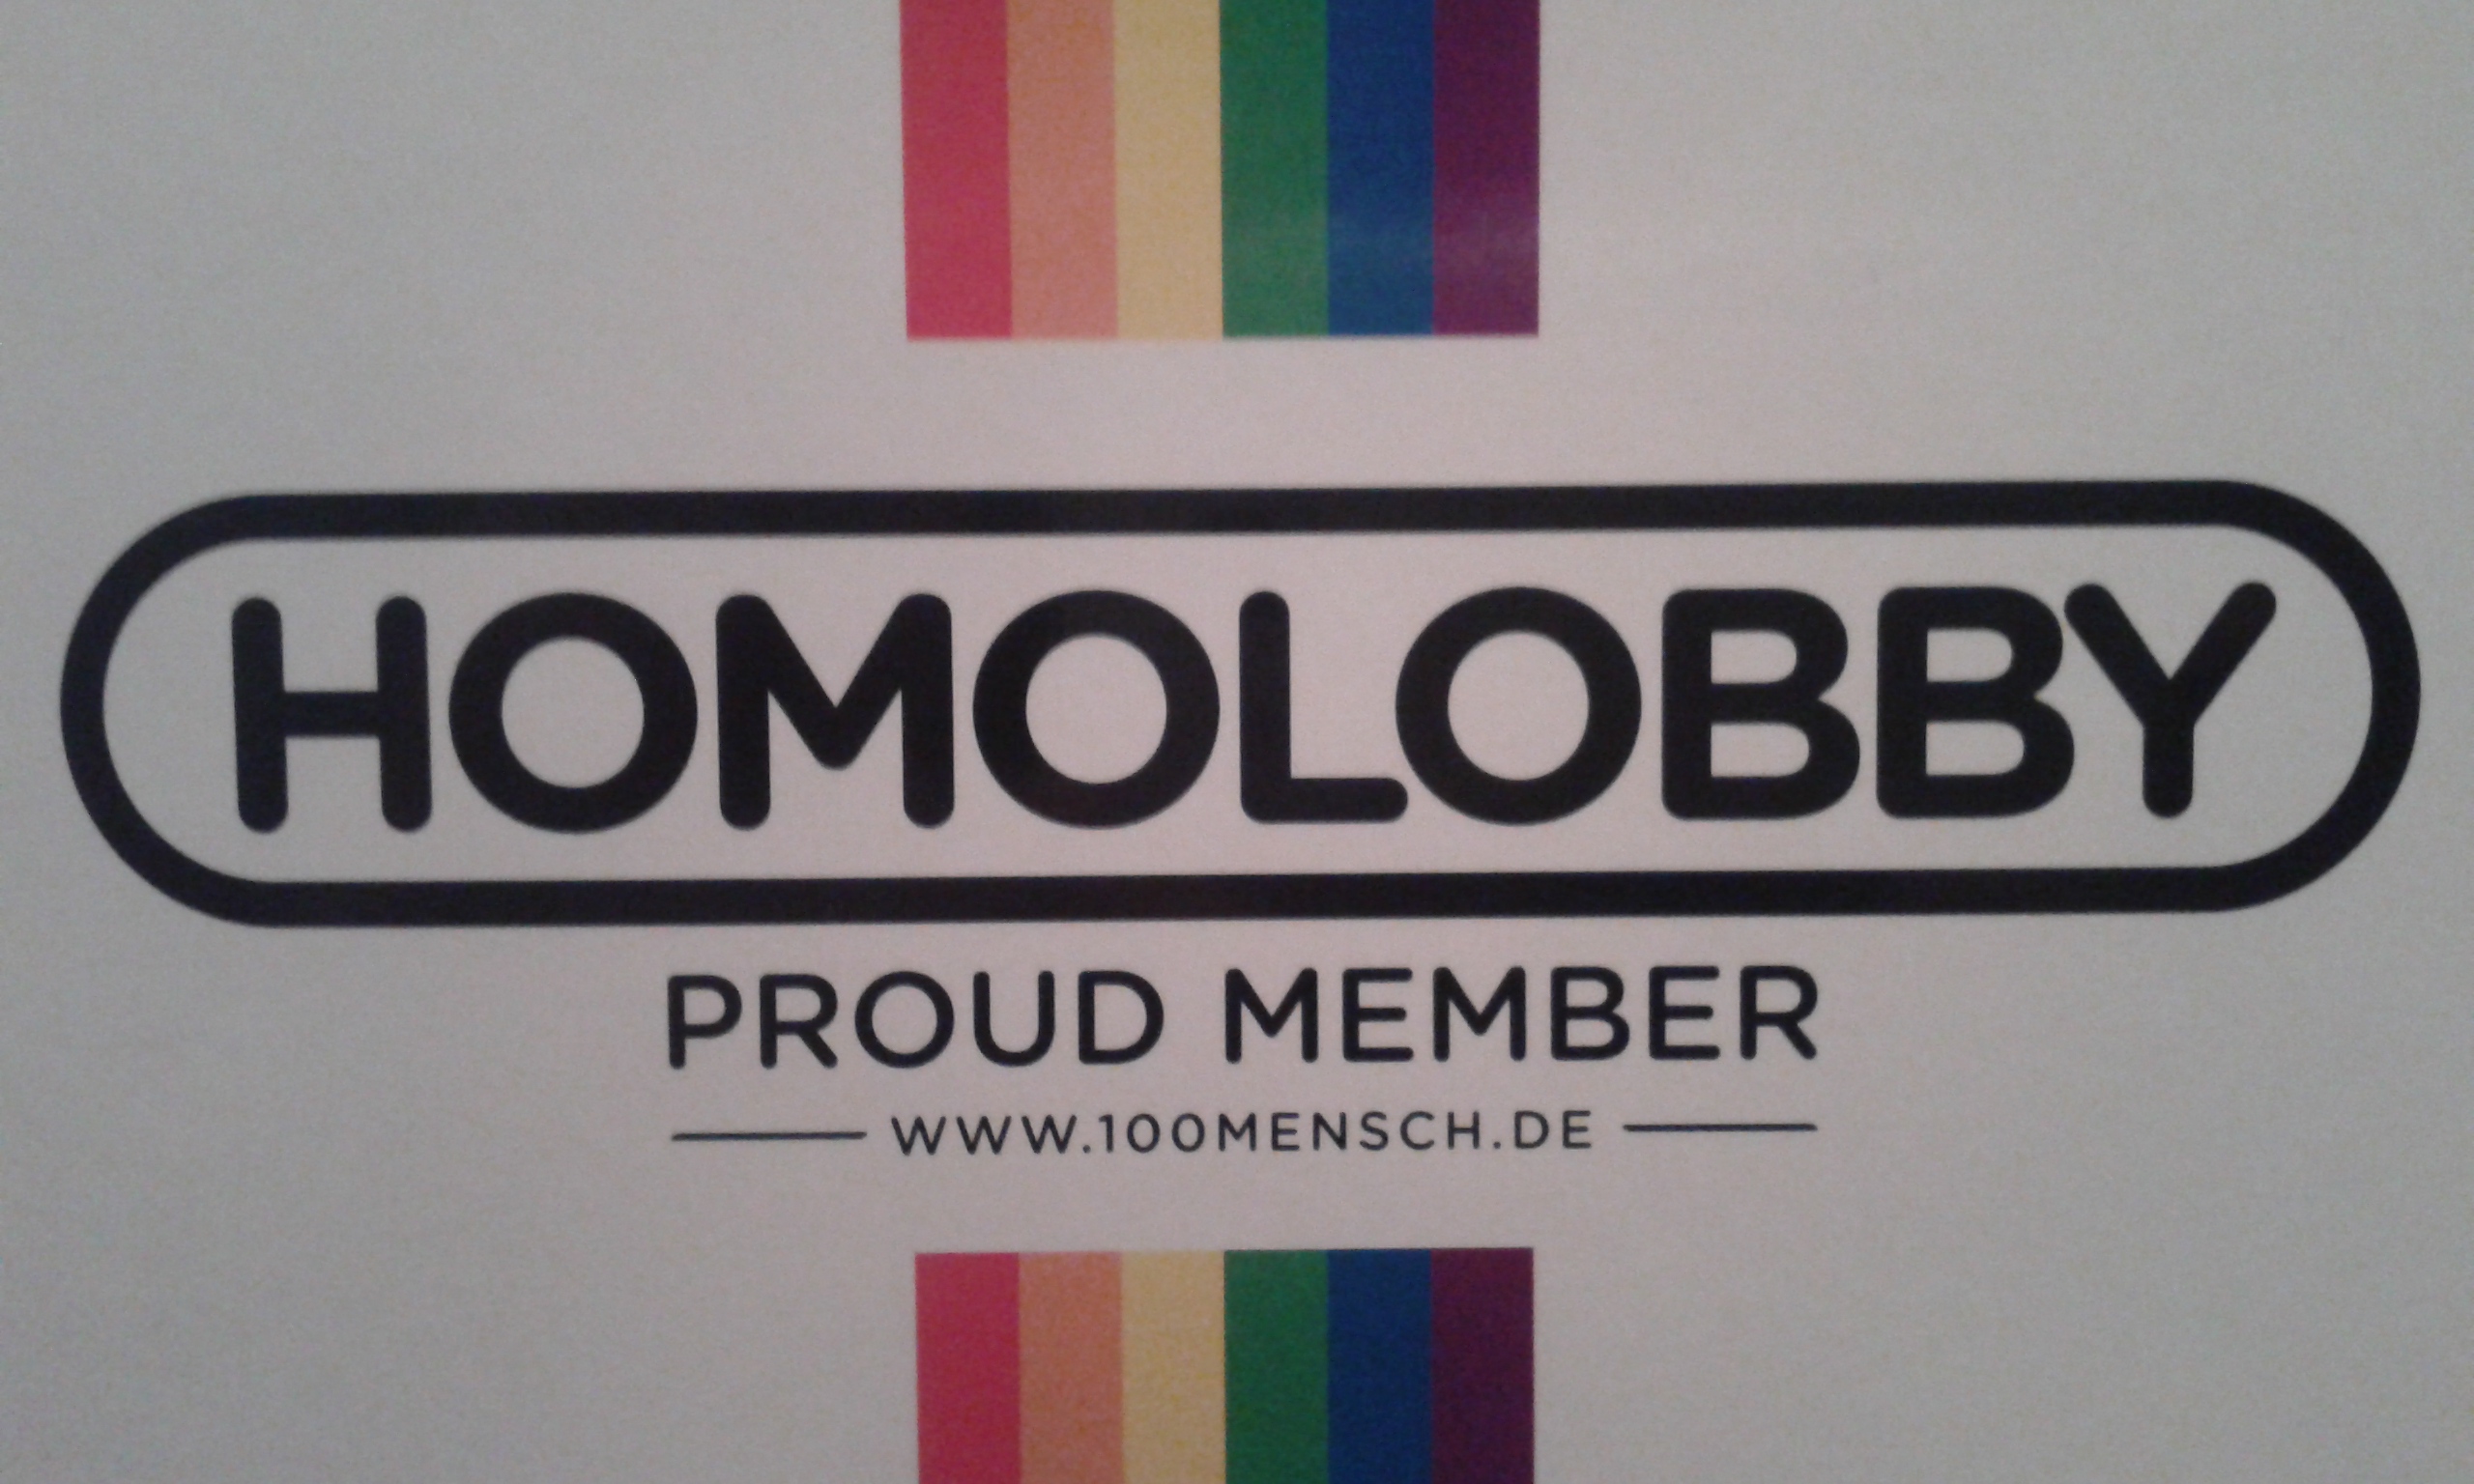 homolobby membership